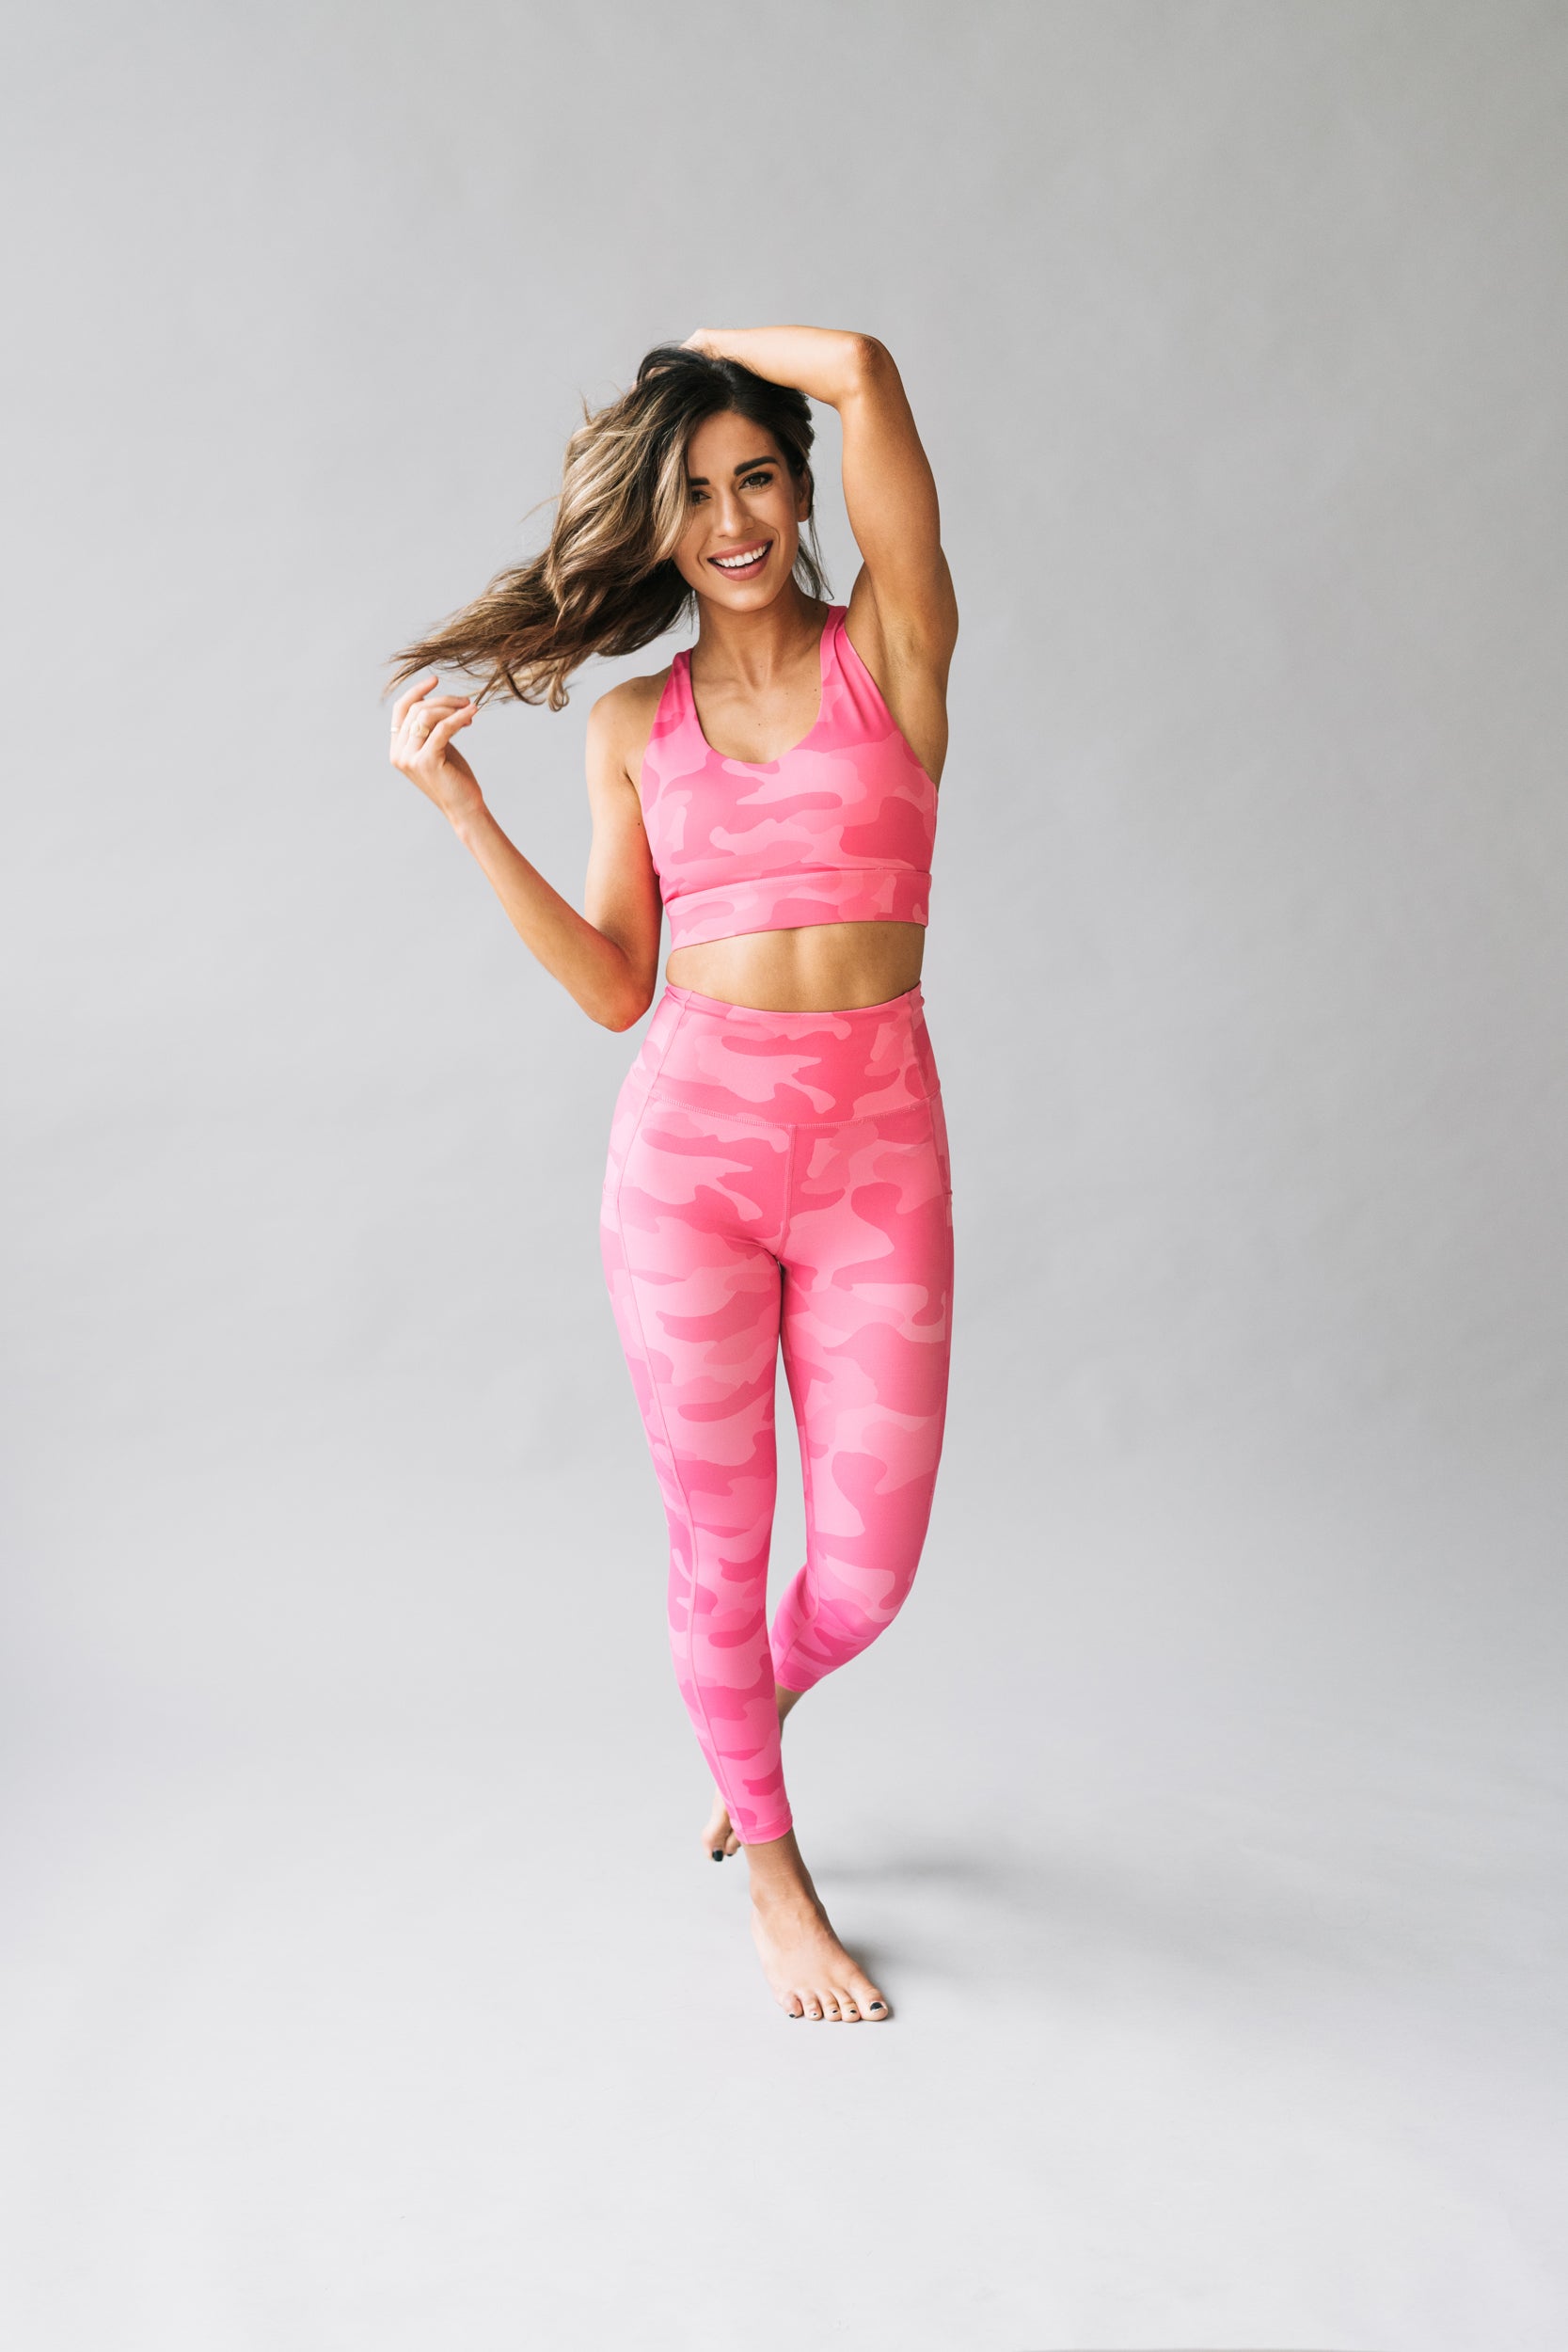 Nike Legend 2.0 Pink Camo Leggings  Gymwear outfits, Camo leggings, Pink  camo